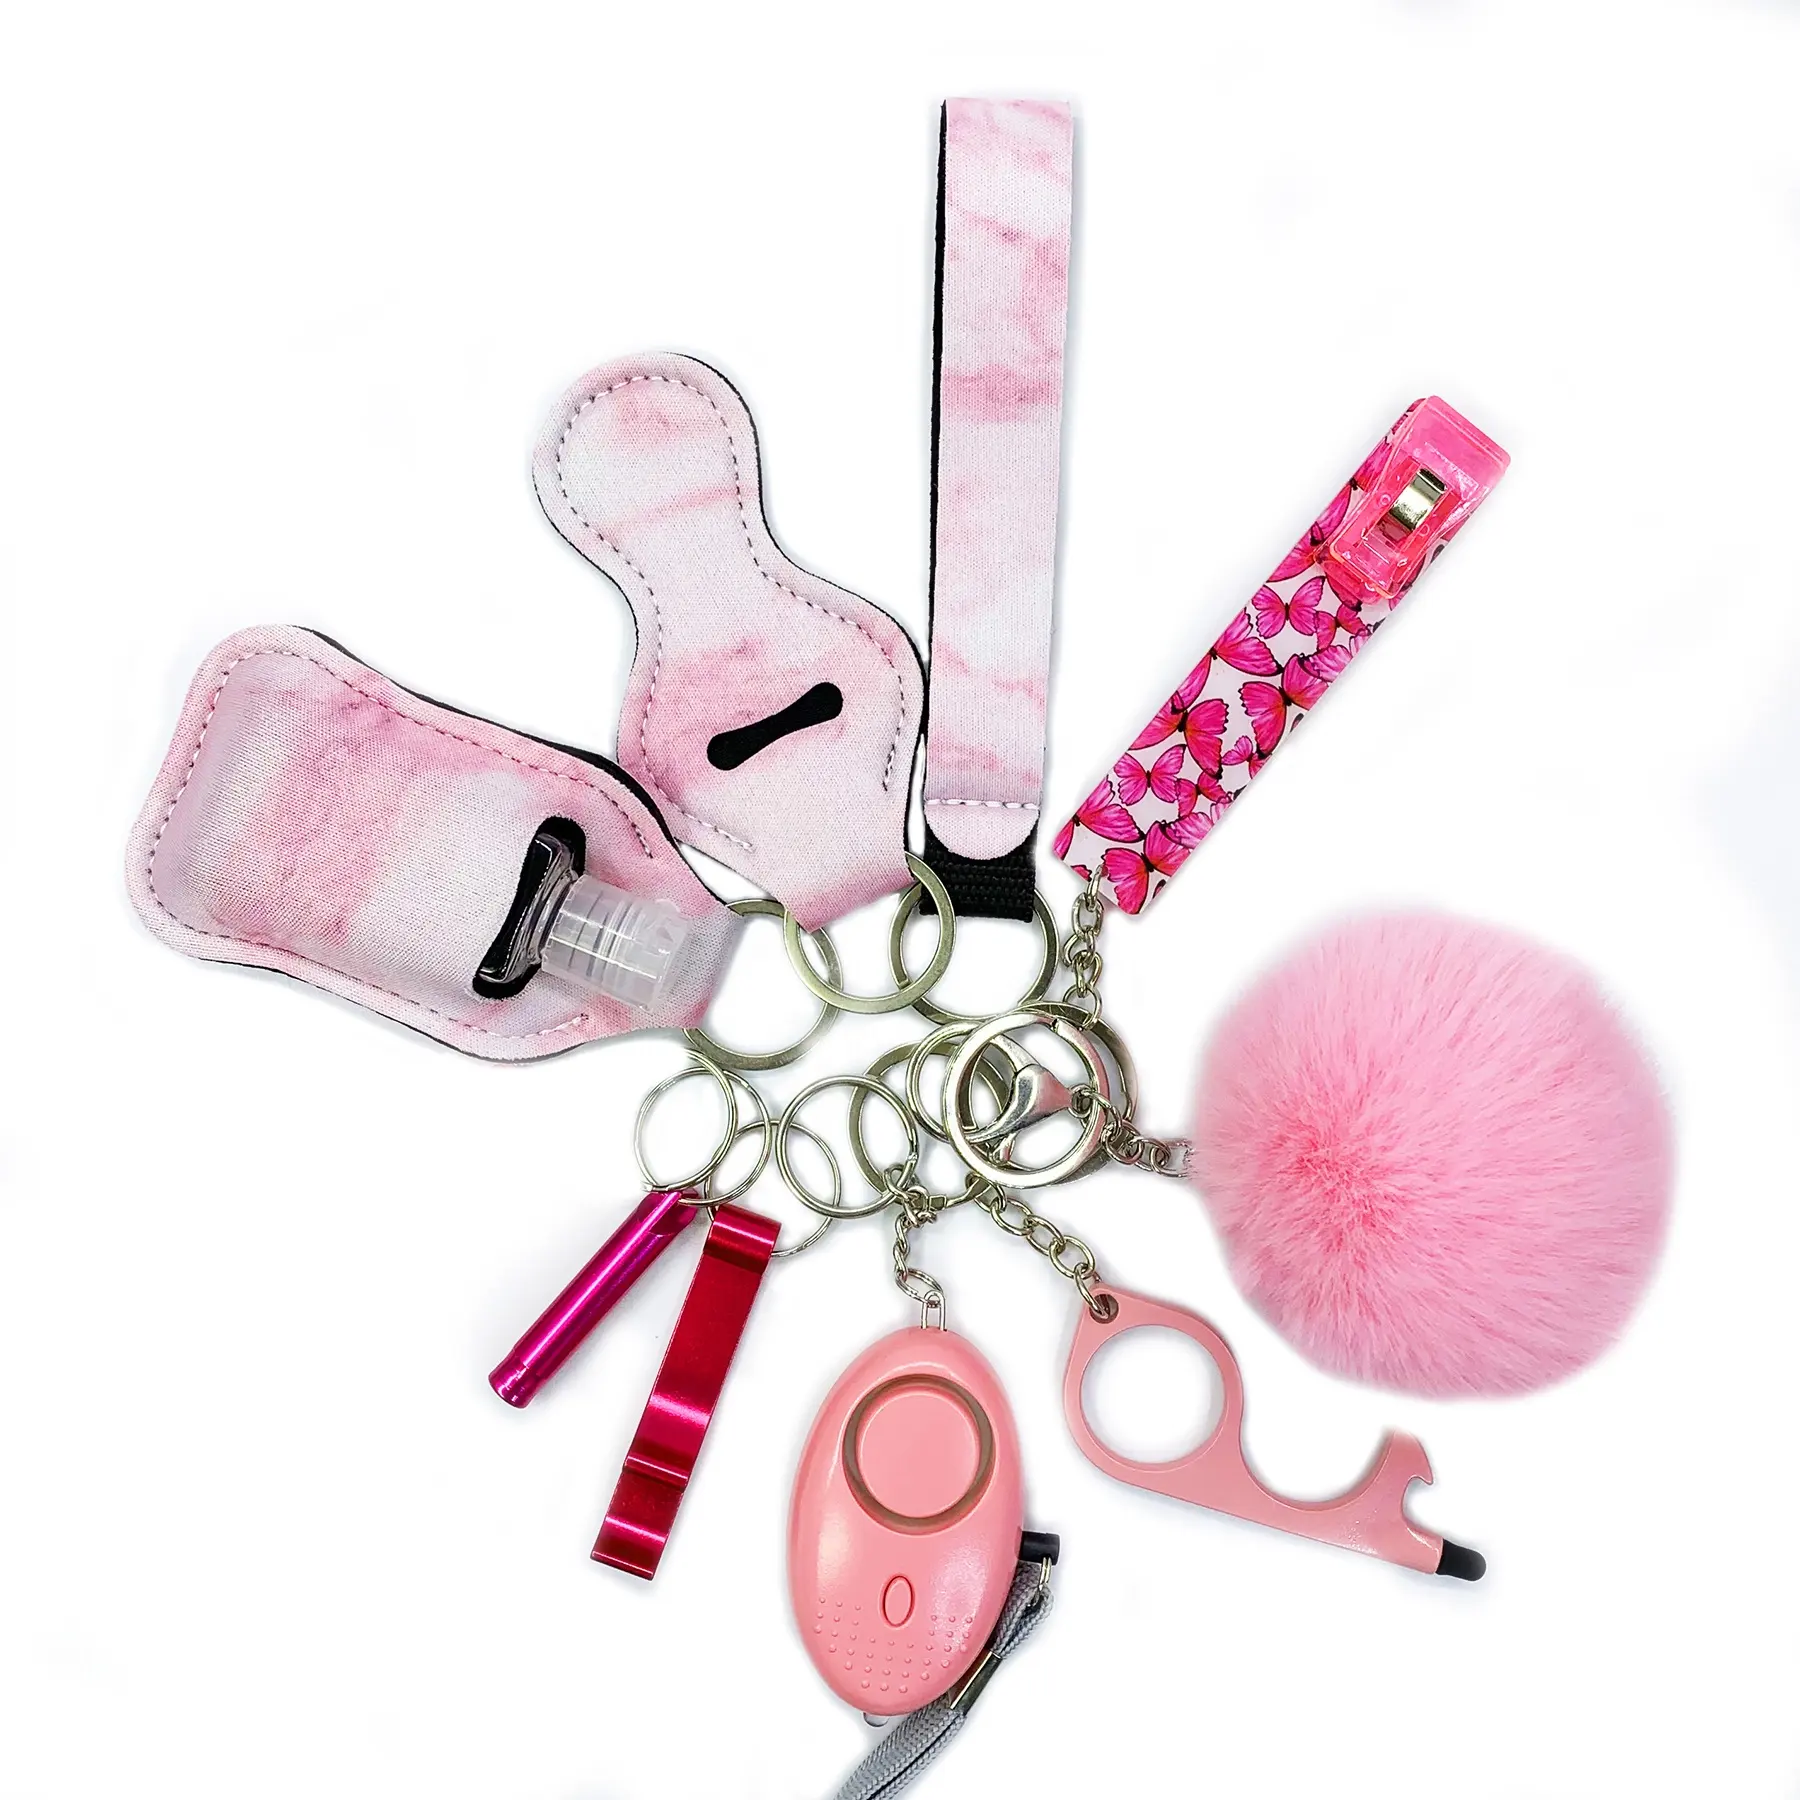 Multi color self defense keychain set pom pom sound alarm lipstick holder whistle door opener bottle opener safety keychain kit